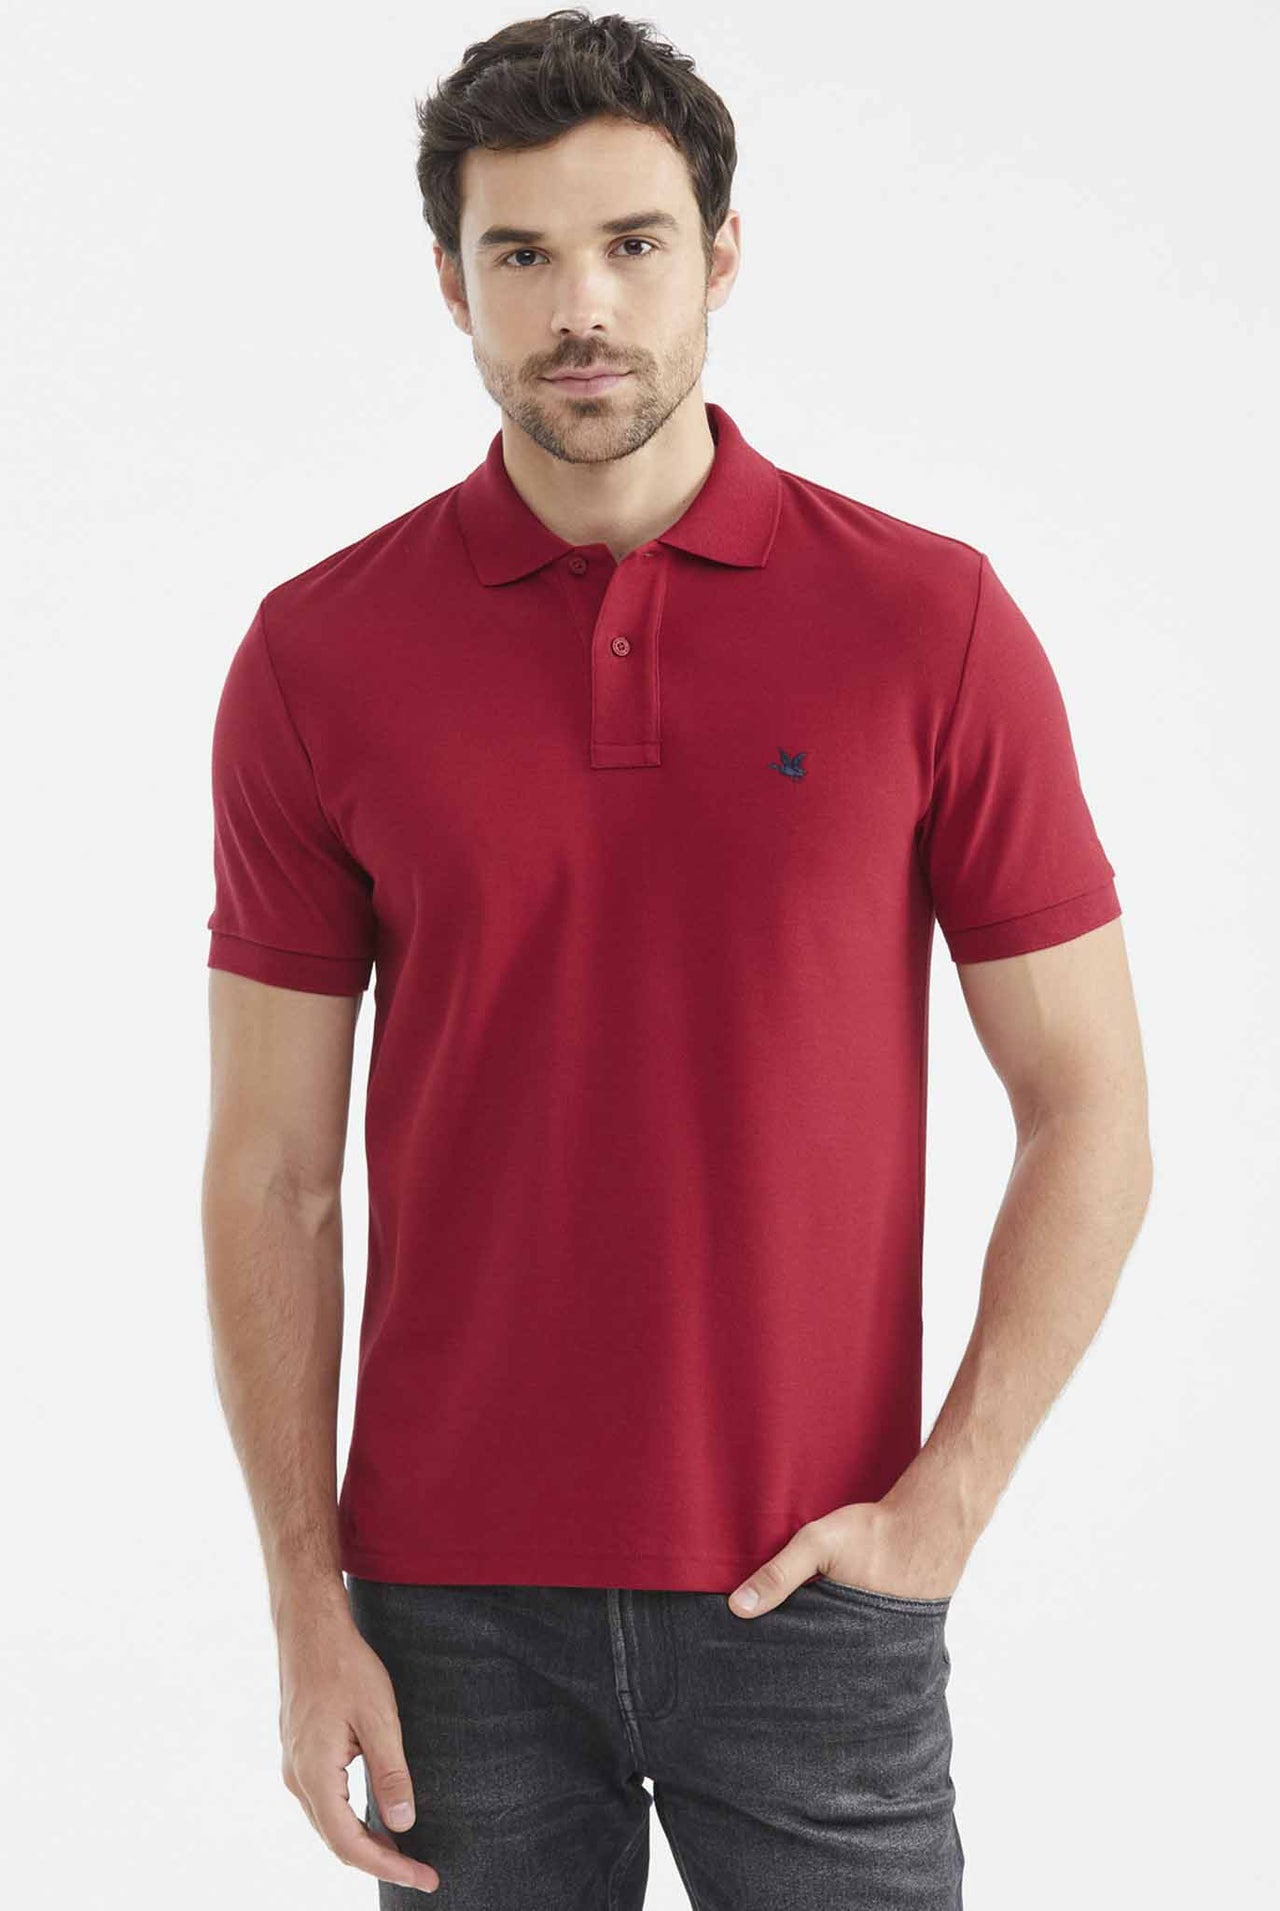 Camiseta Tipo Polo Chevignon Ajuste Clásico Manga Corta, Cuello Tejido Tono Rojo